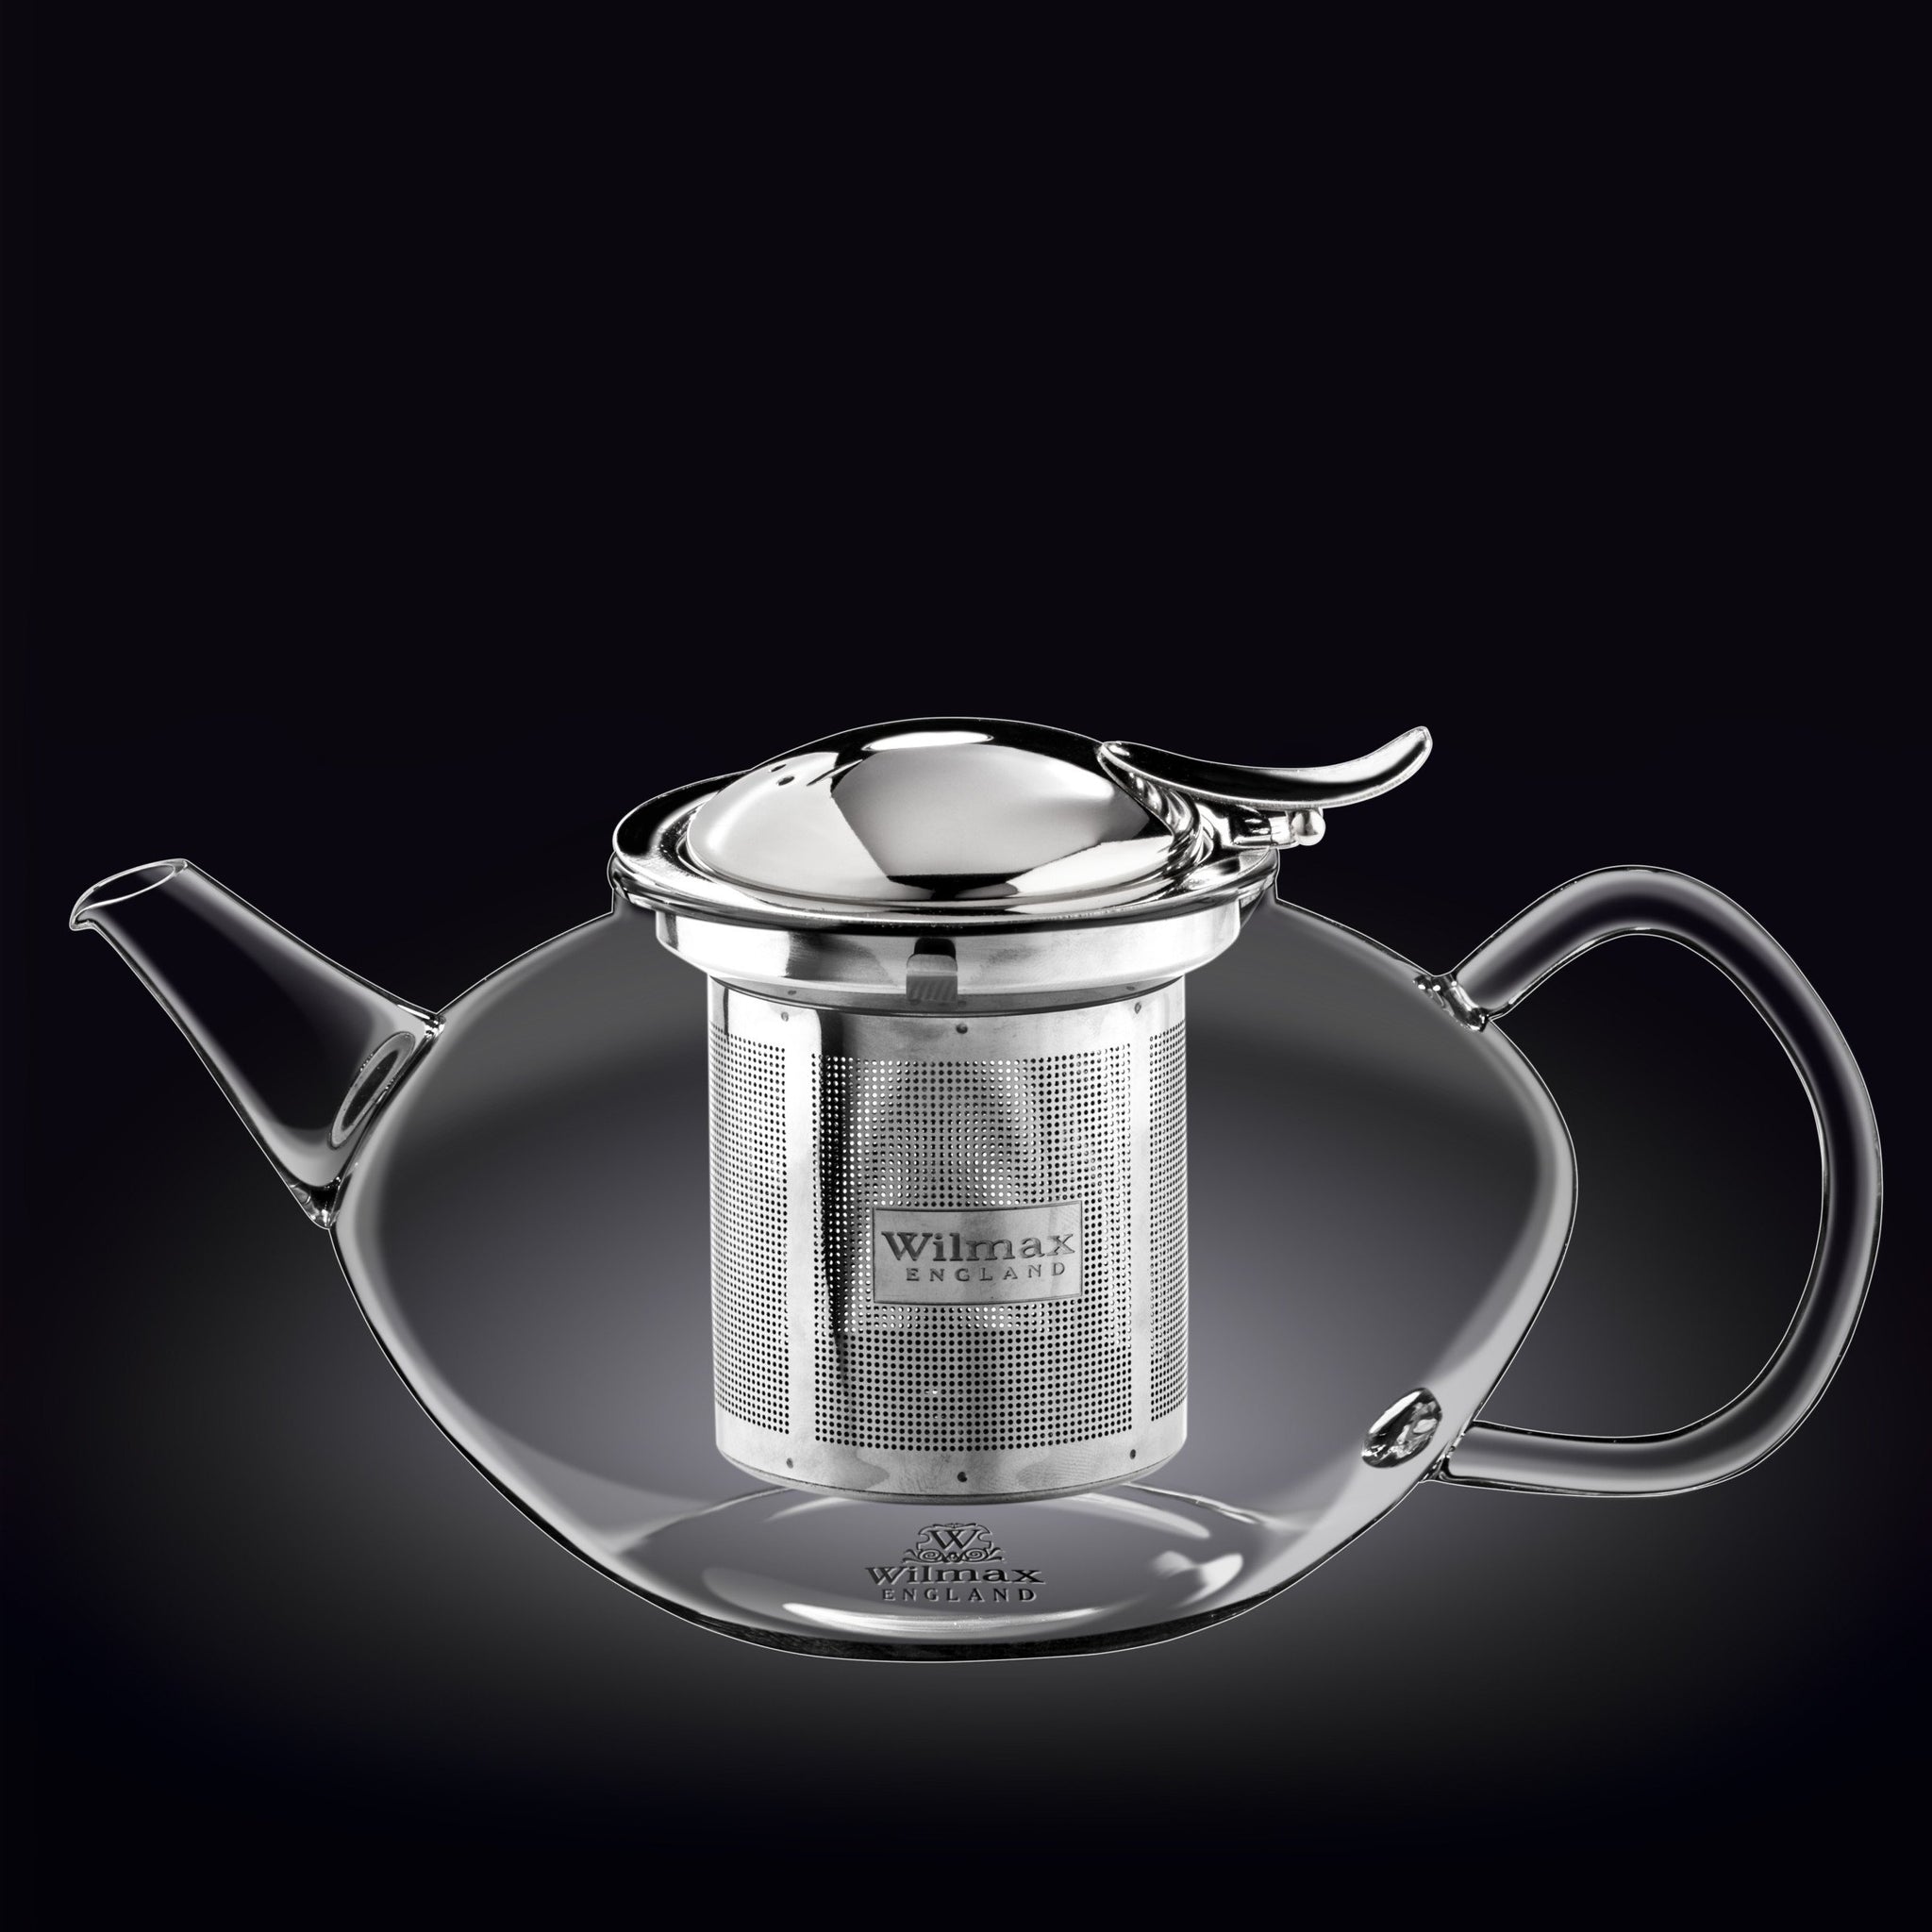 Wilmax Thermo Glass Tea Pot 52 fl oz | 1550 ml WL-888806/A